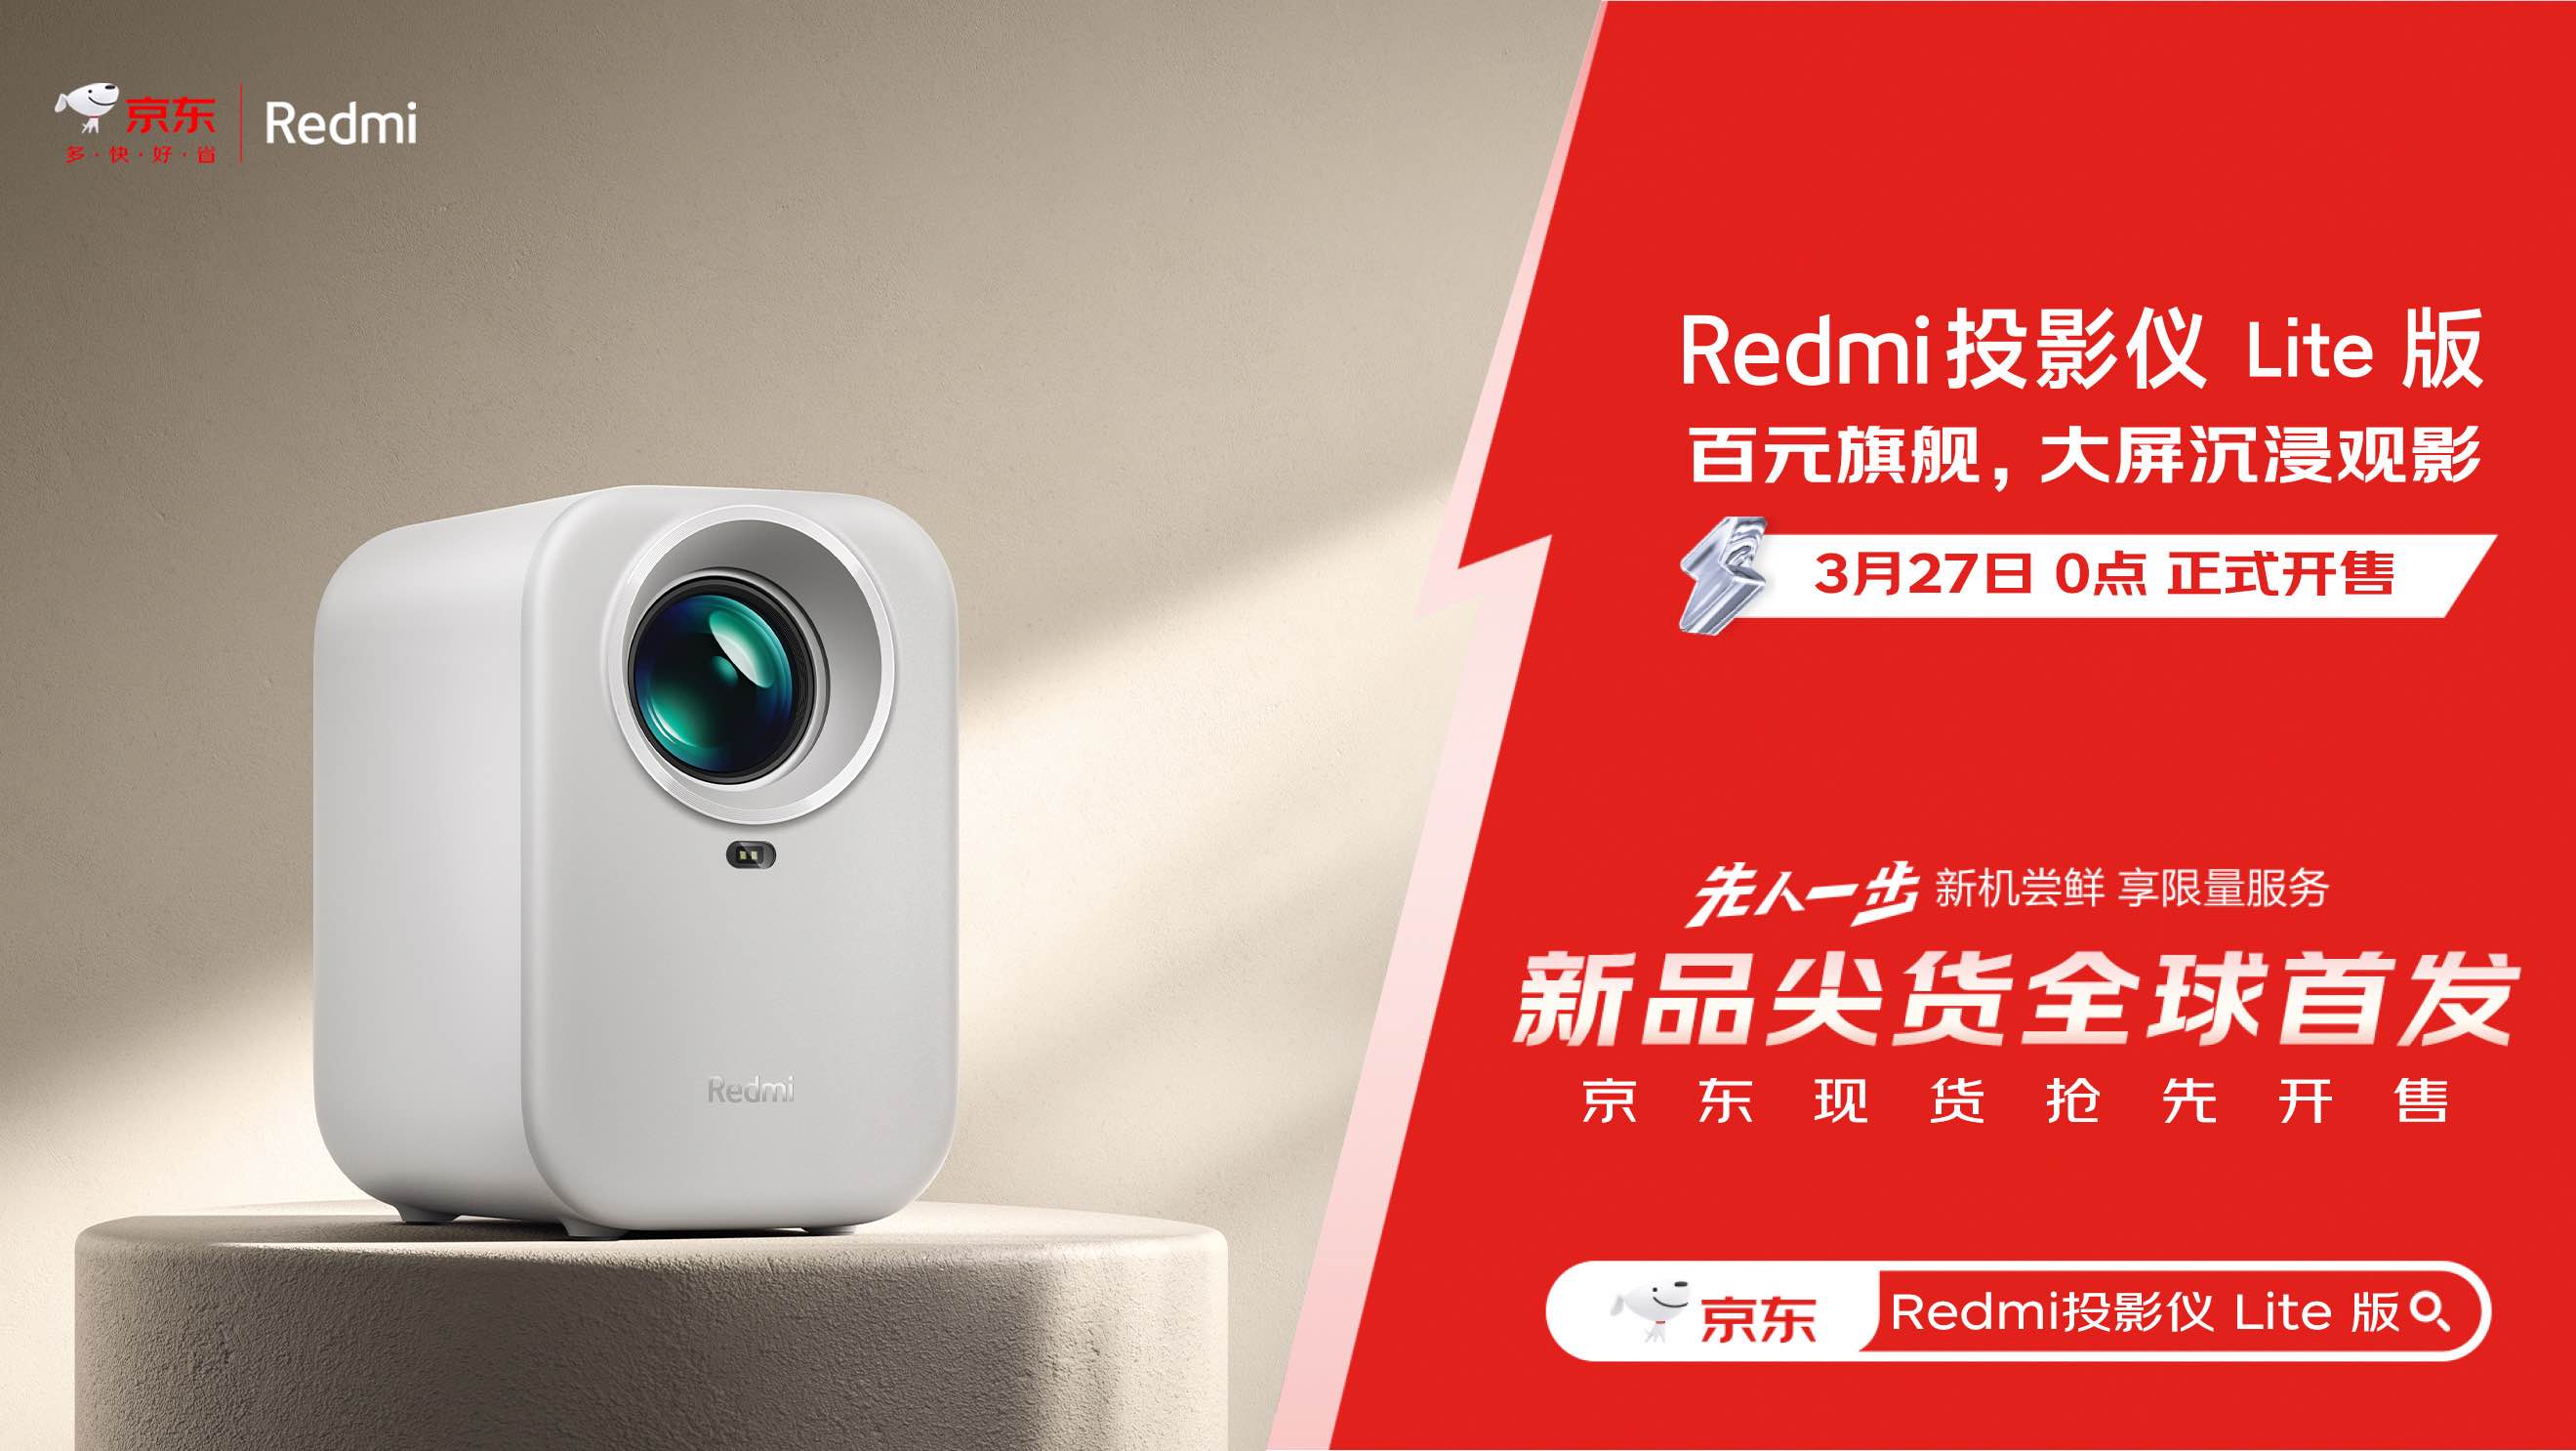 Redmi投影仪Lite版京东开启预售：3月22日“先人一步”抢先购